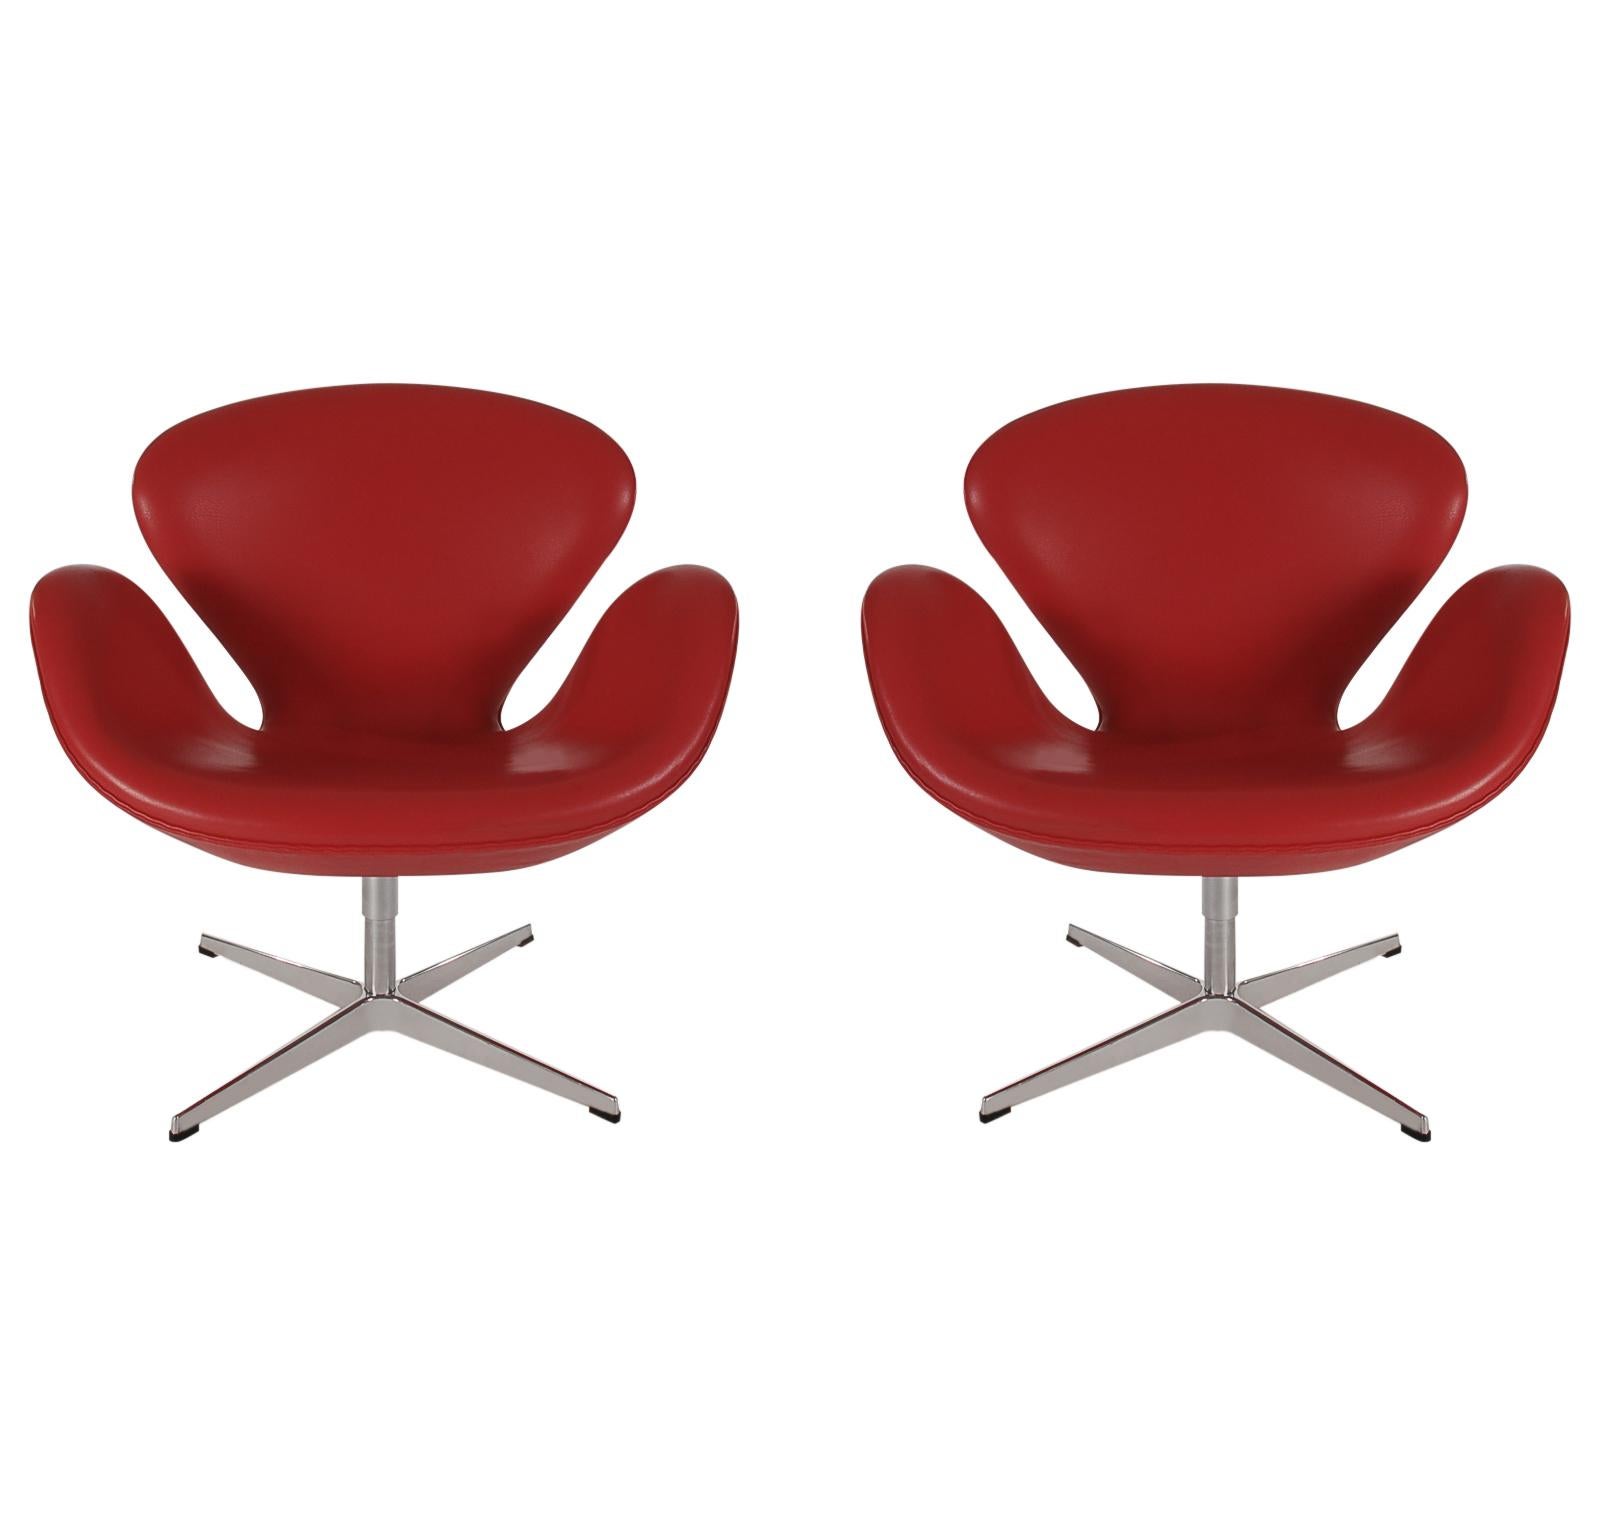 Midcentury Danish Modern Pair of Red Leather Swivel Swan Chairs / Arne Jacobsen